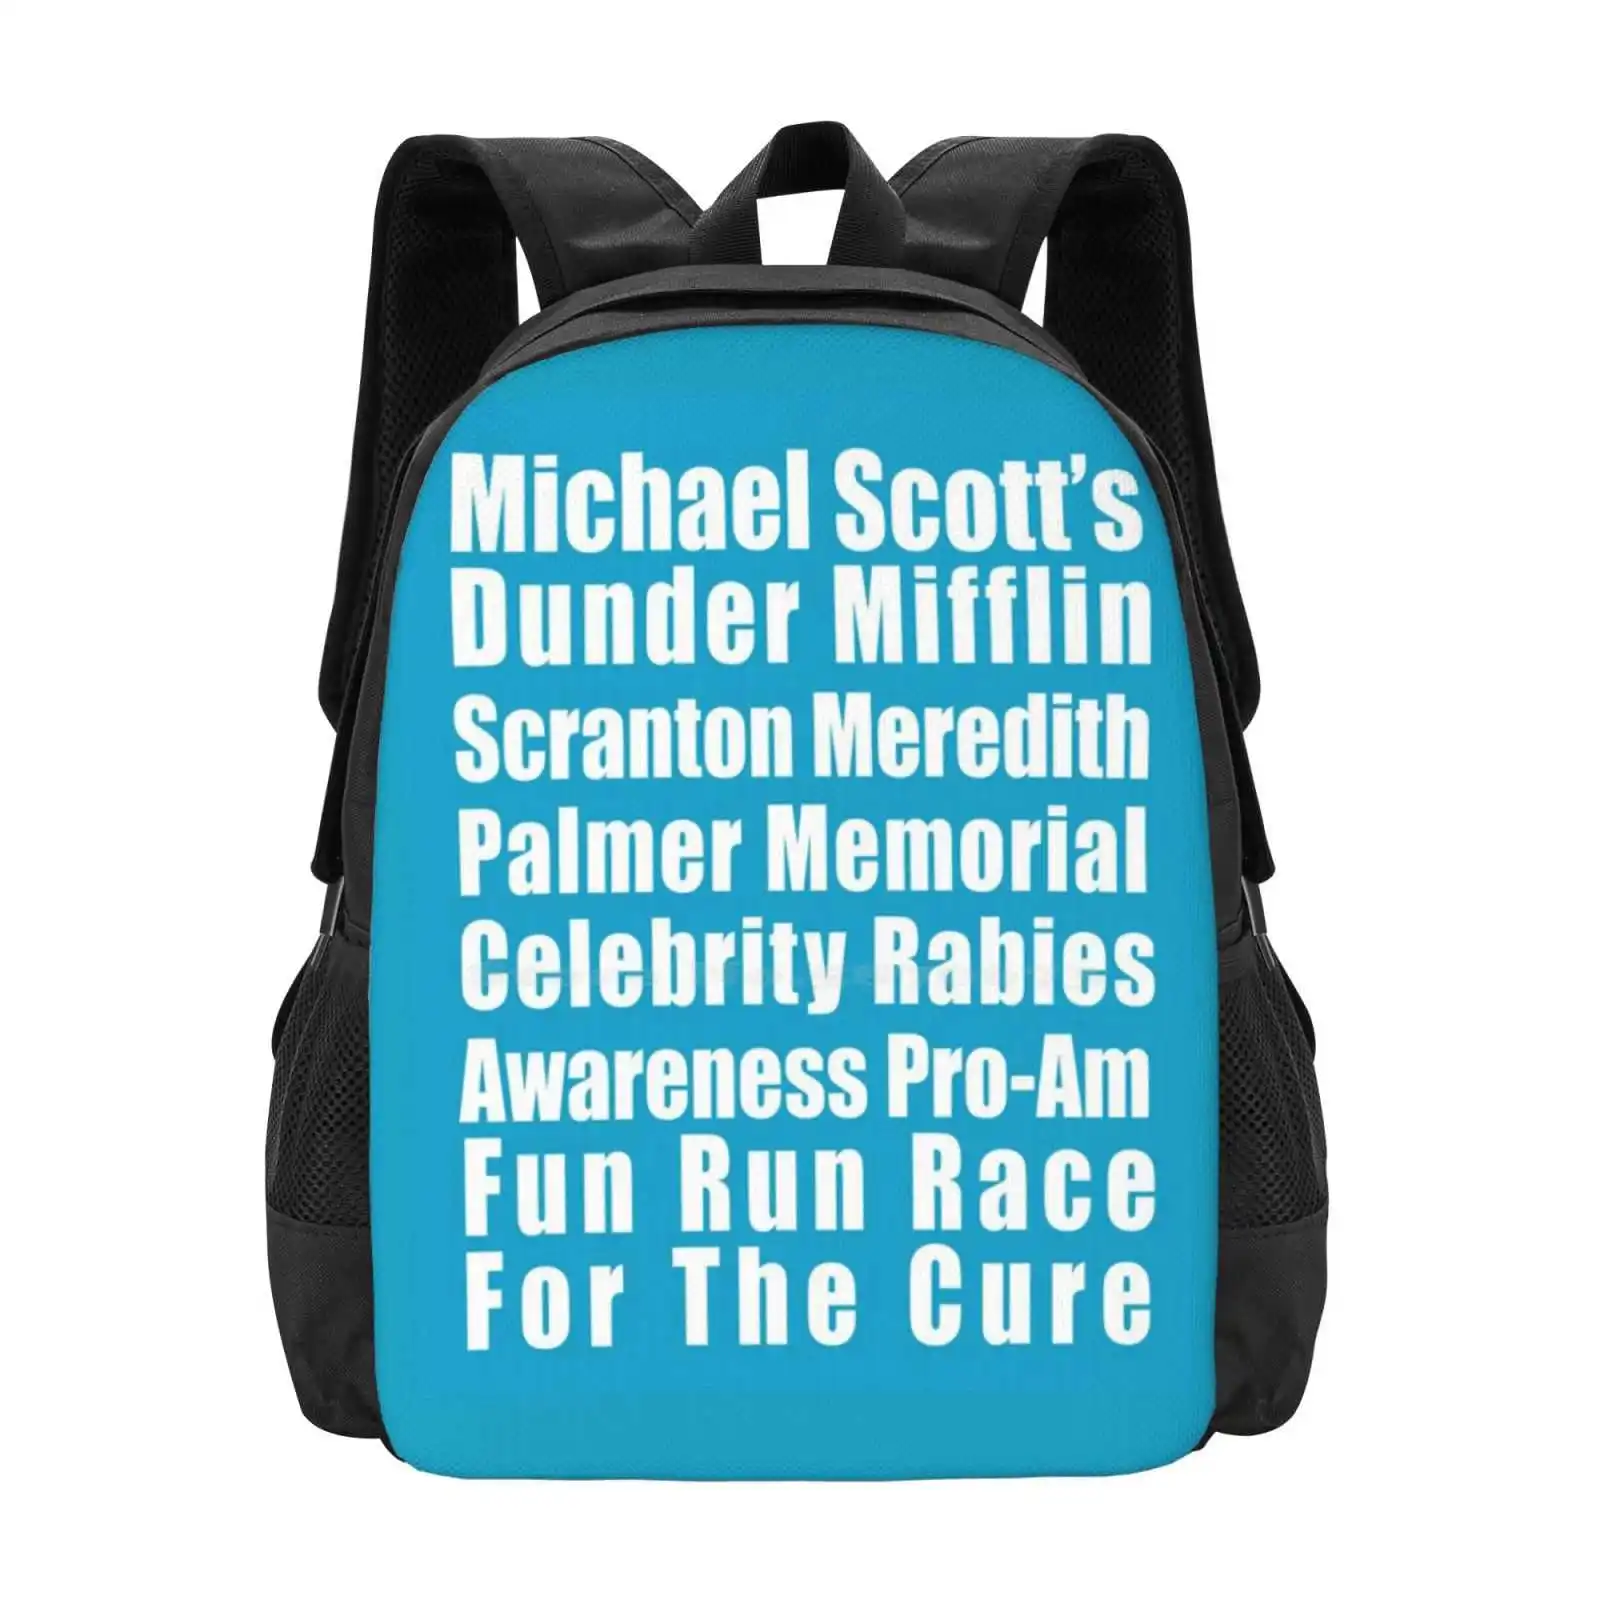 

Michael Scott'S Dunder Mifflin Scranton Meredith Palmer Memorial Celebrity Rabies Awareness Pro-Am Fun Run Race For The Cure